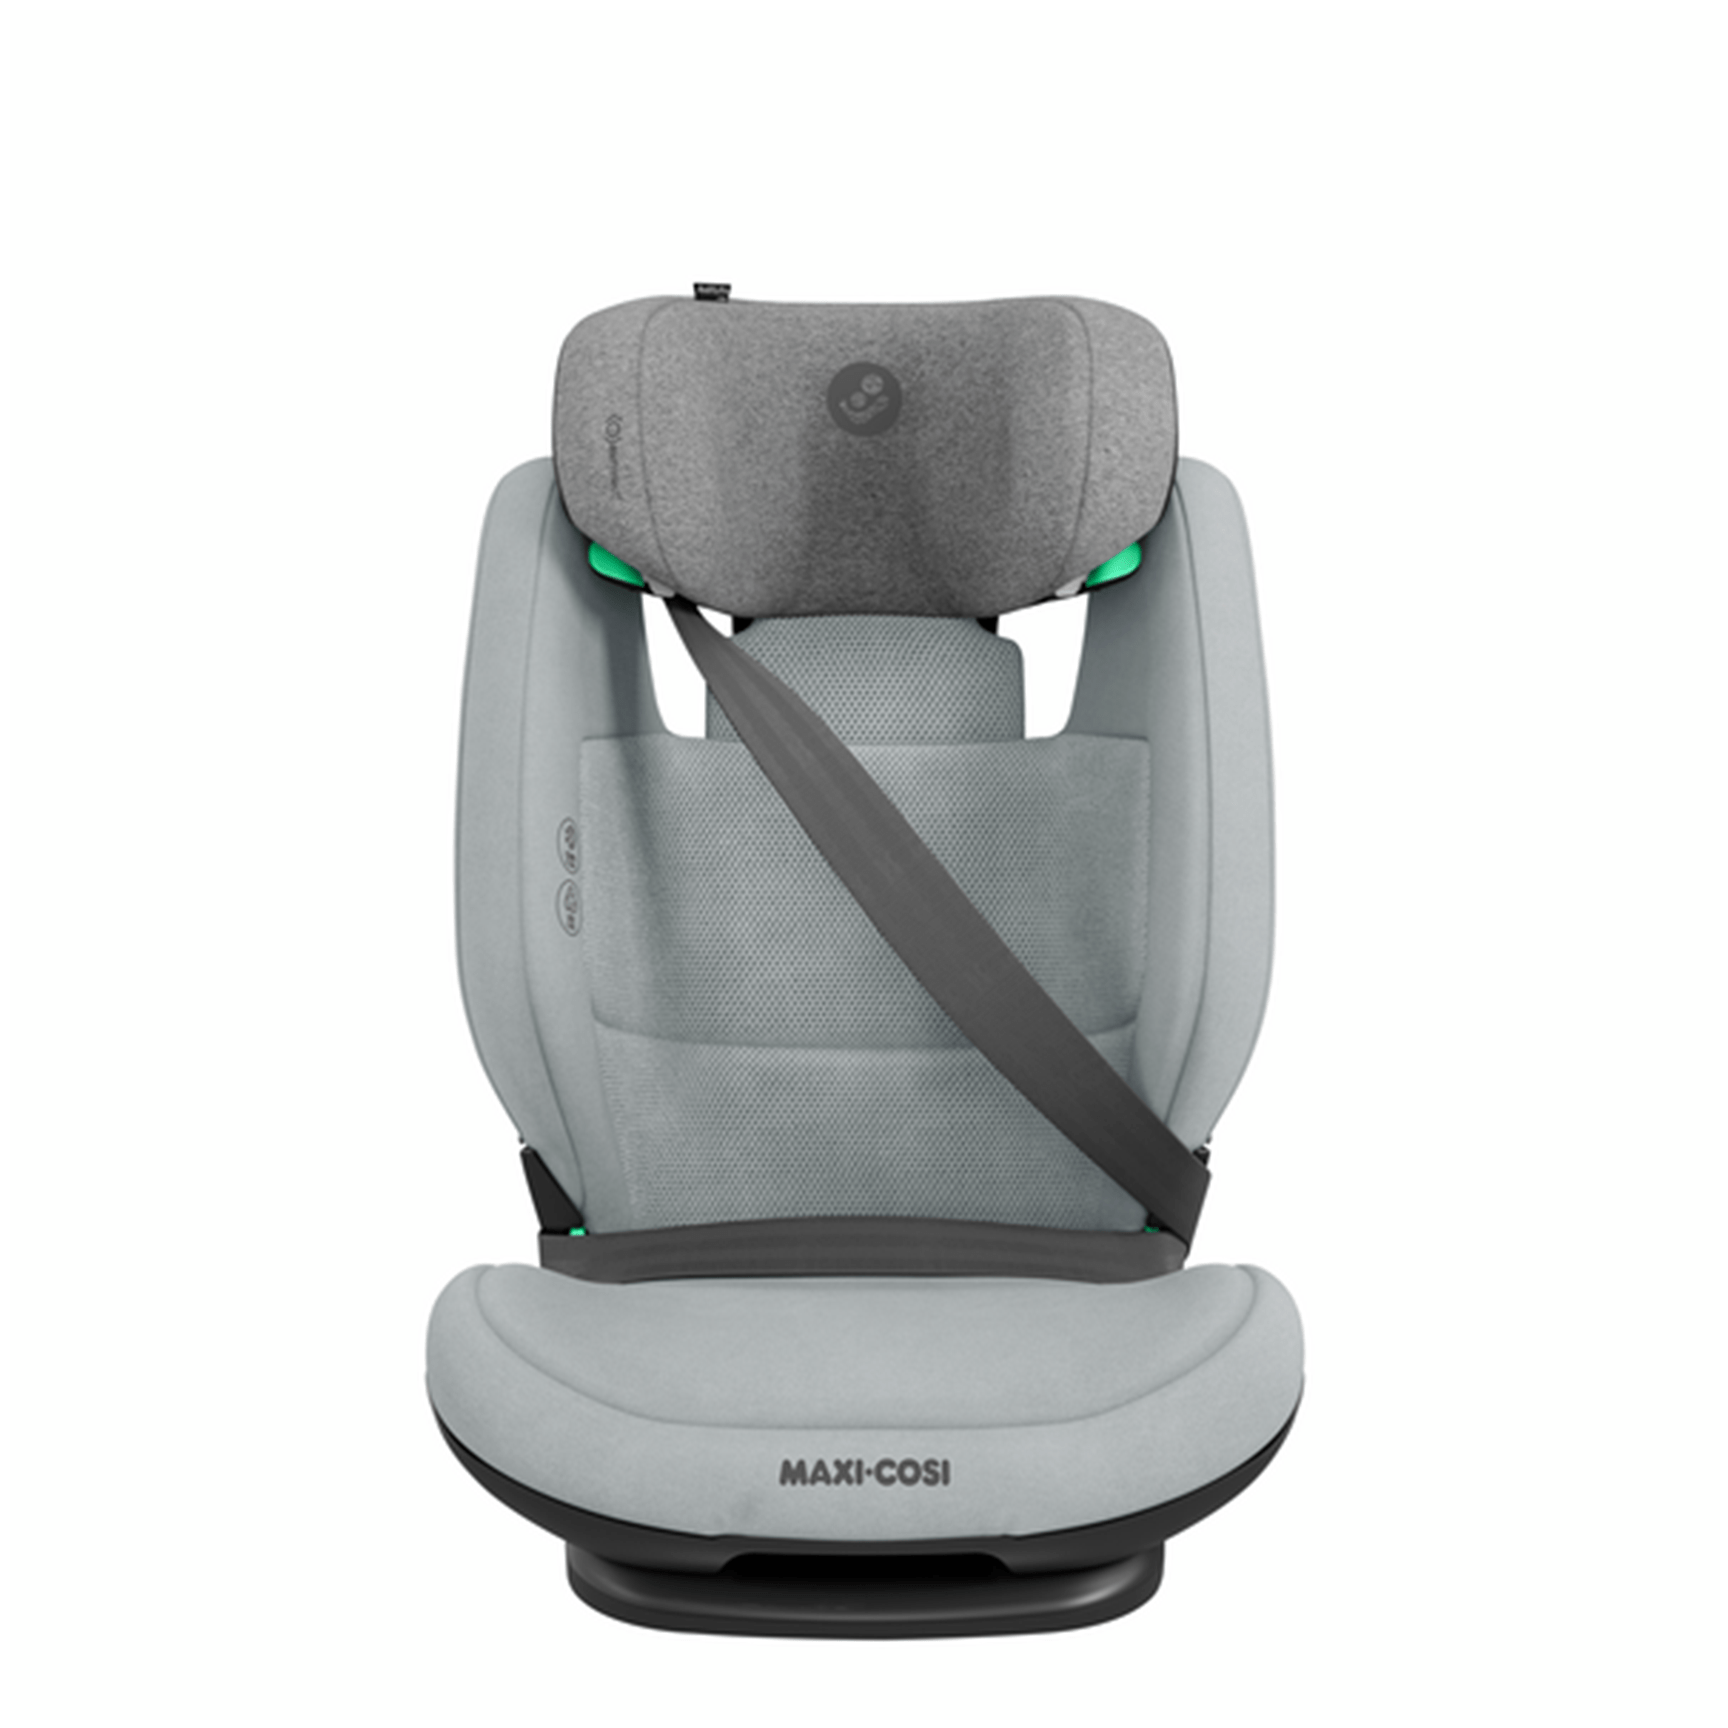 Maxi-Cosi Rodifix Pro i-size Car Seat - Authenic Grey